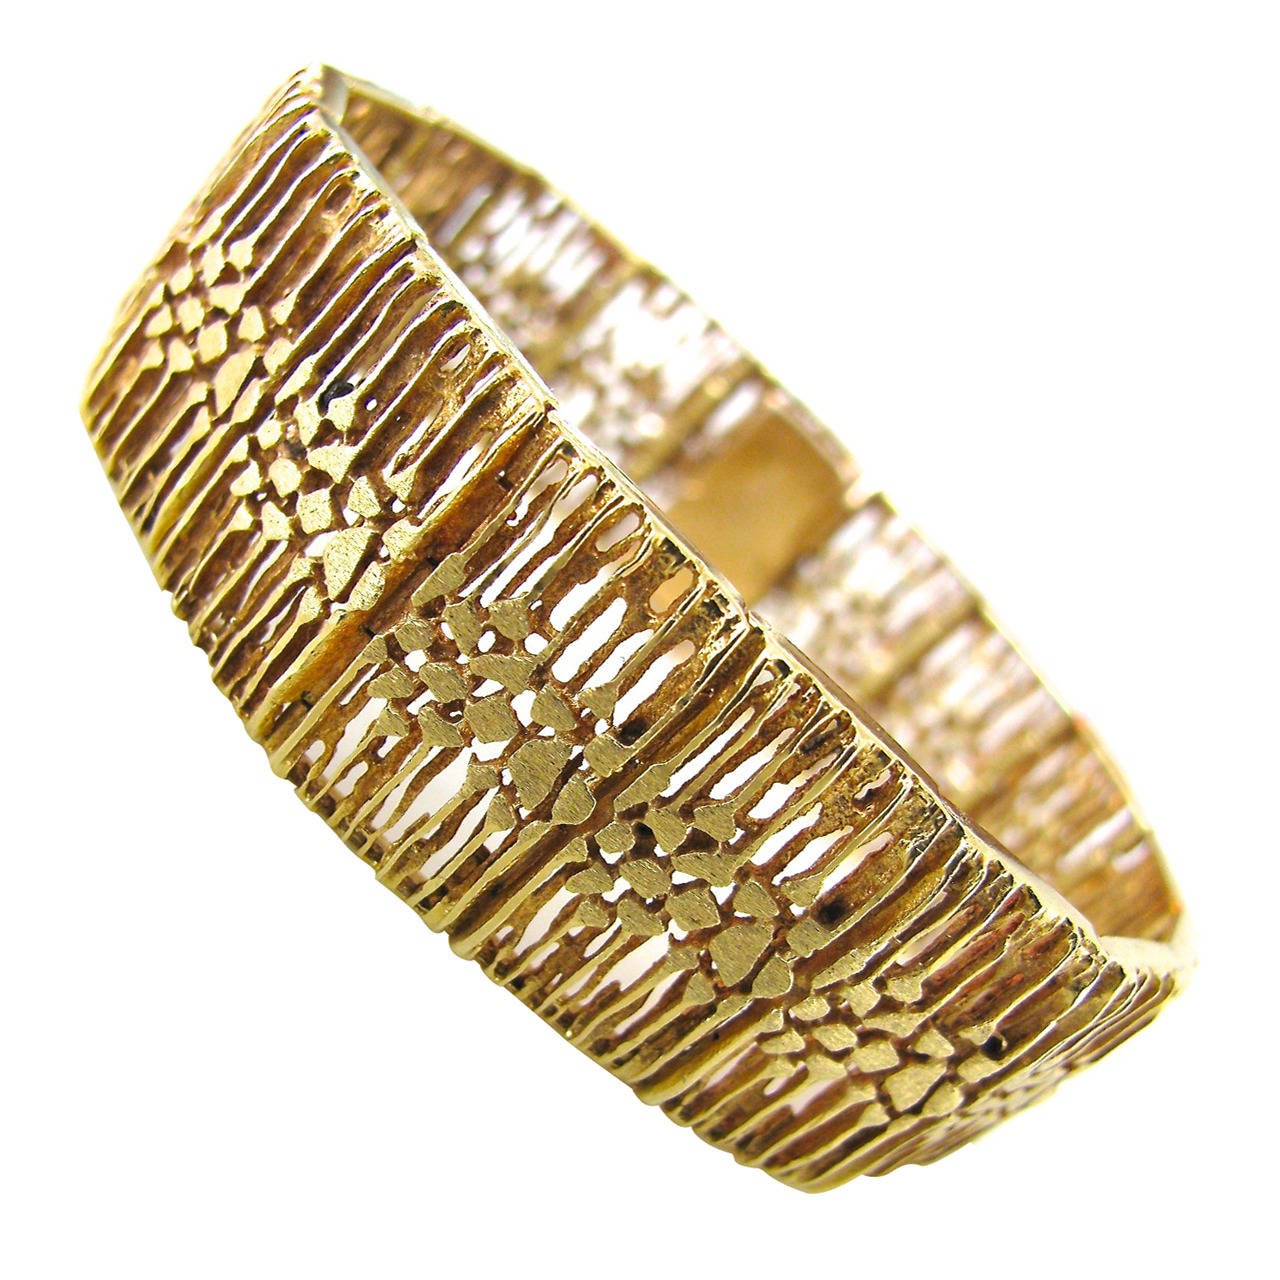 A Modernist Gold Bracelet circa 1960